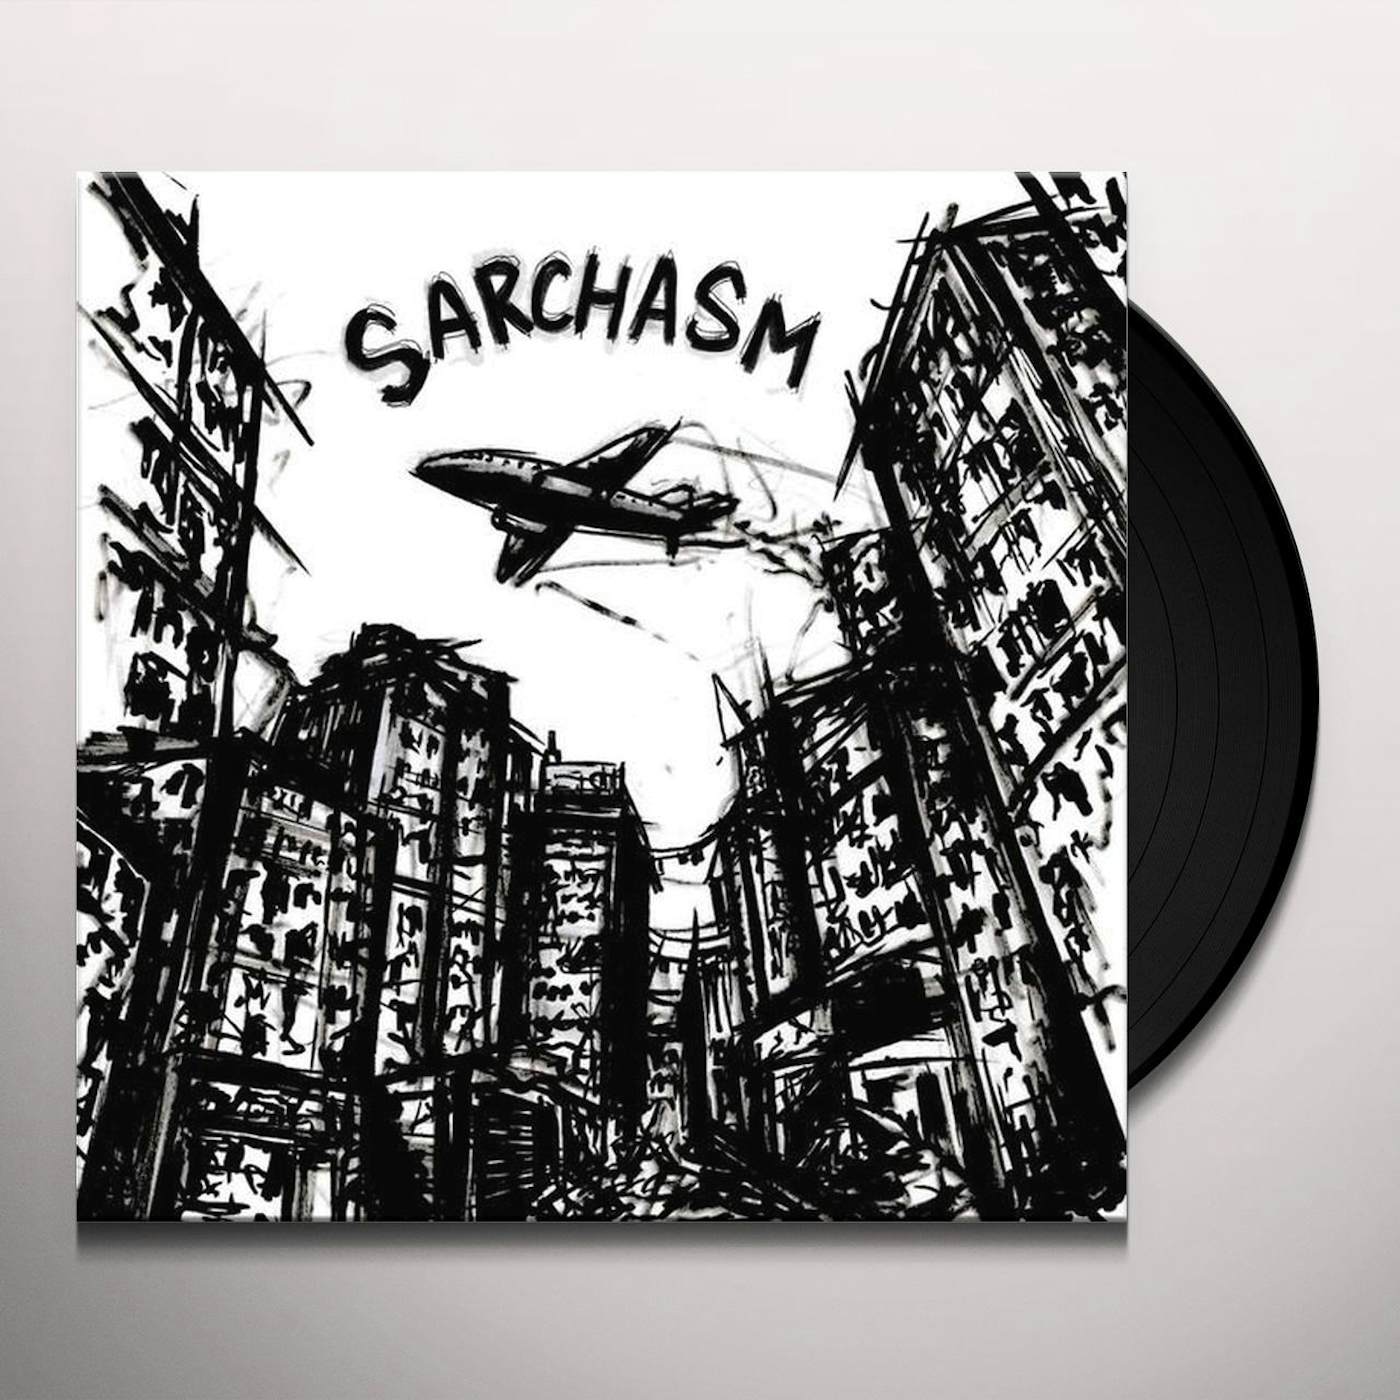 Sarchasm Vinyl Record